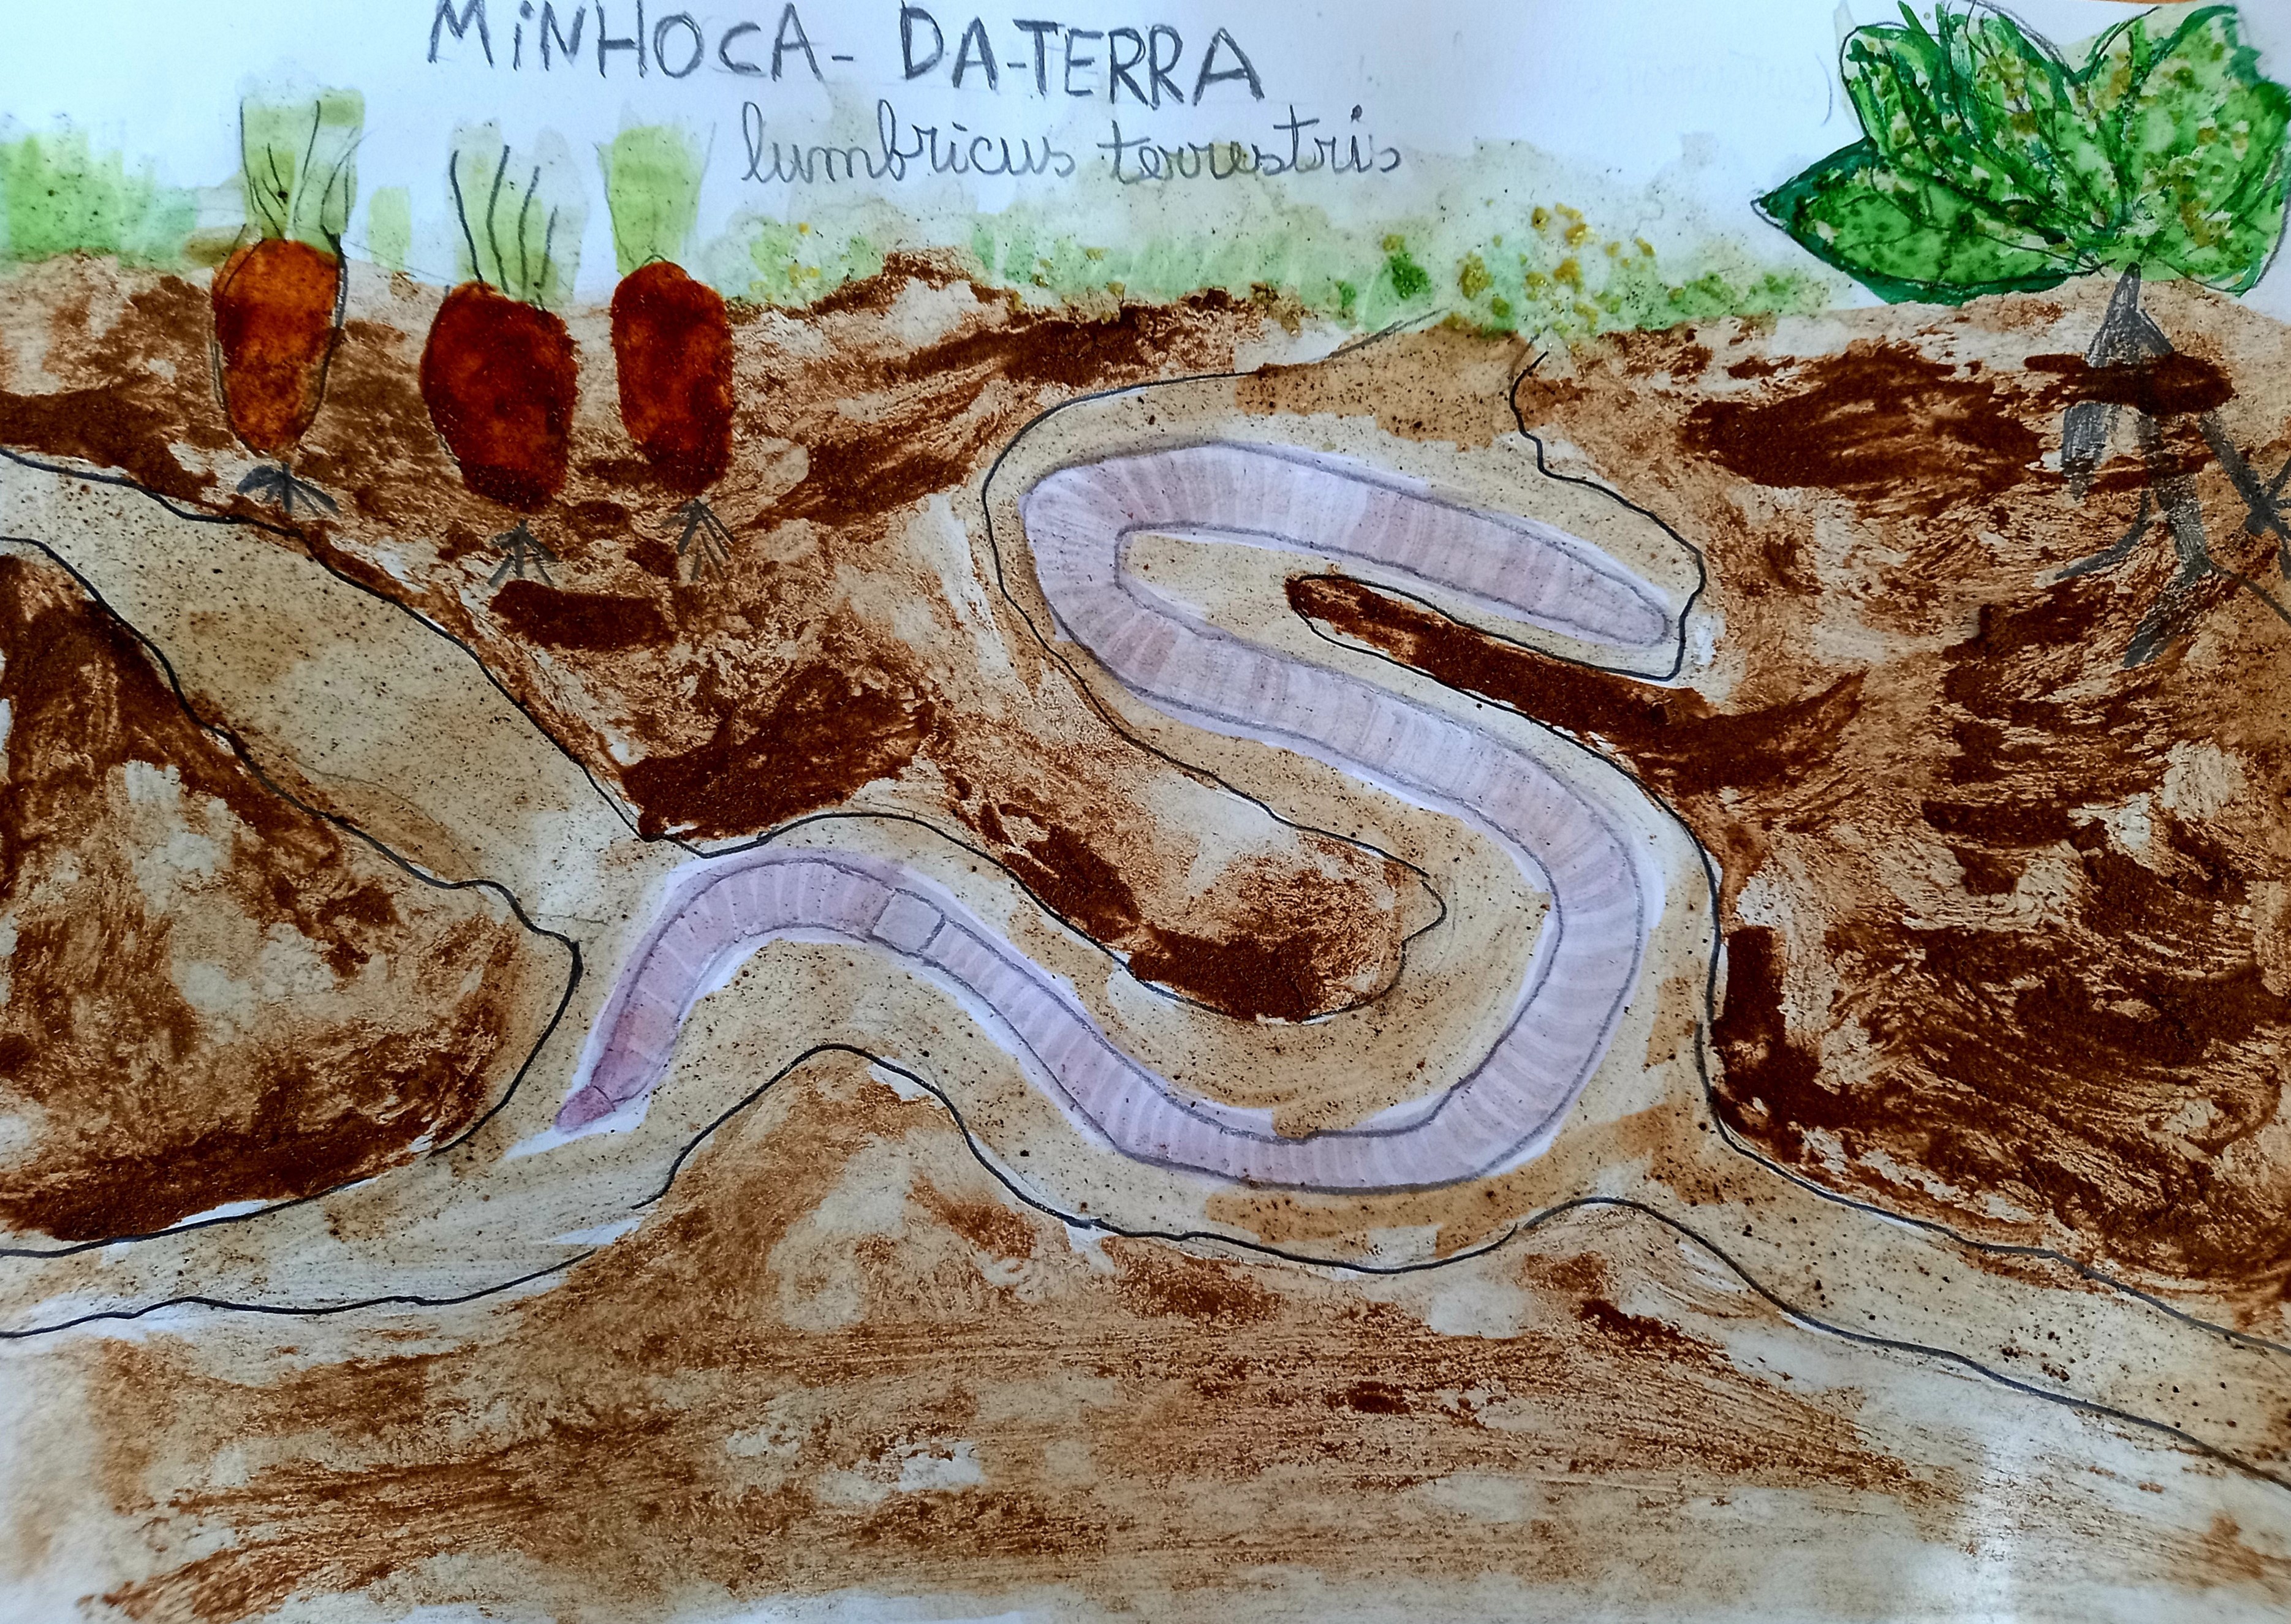 Minhoca-da-terra (lumbricus terrestris)